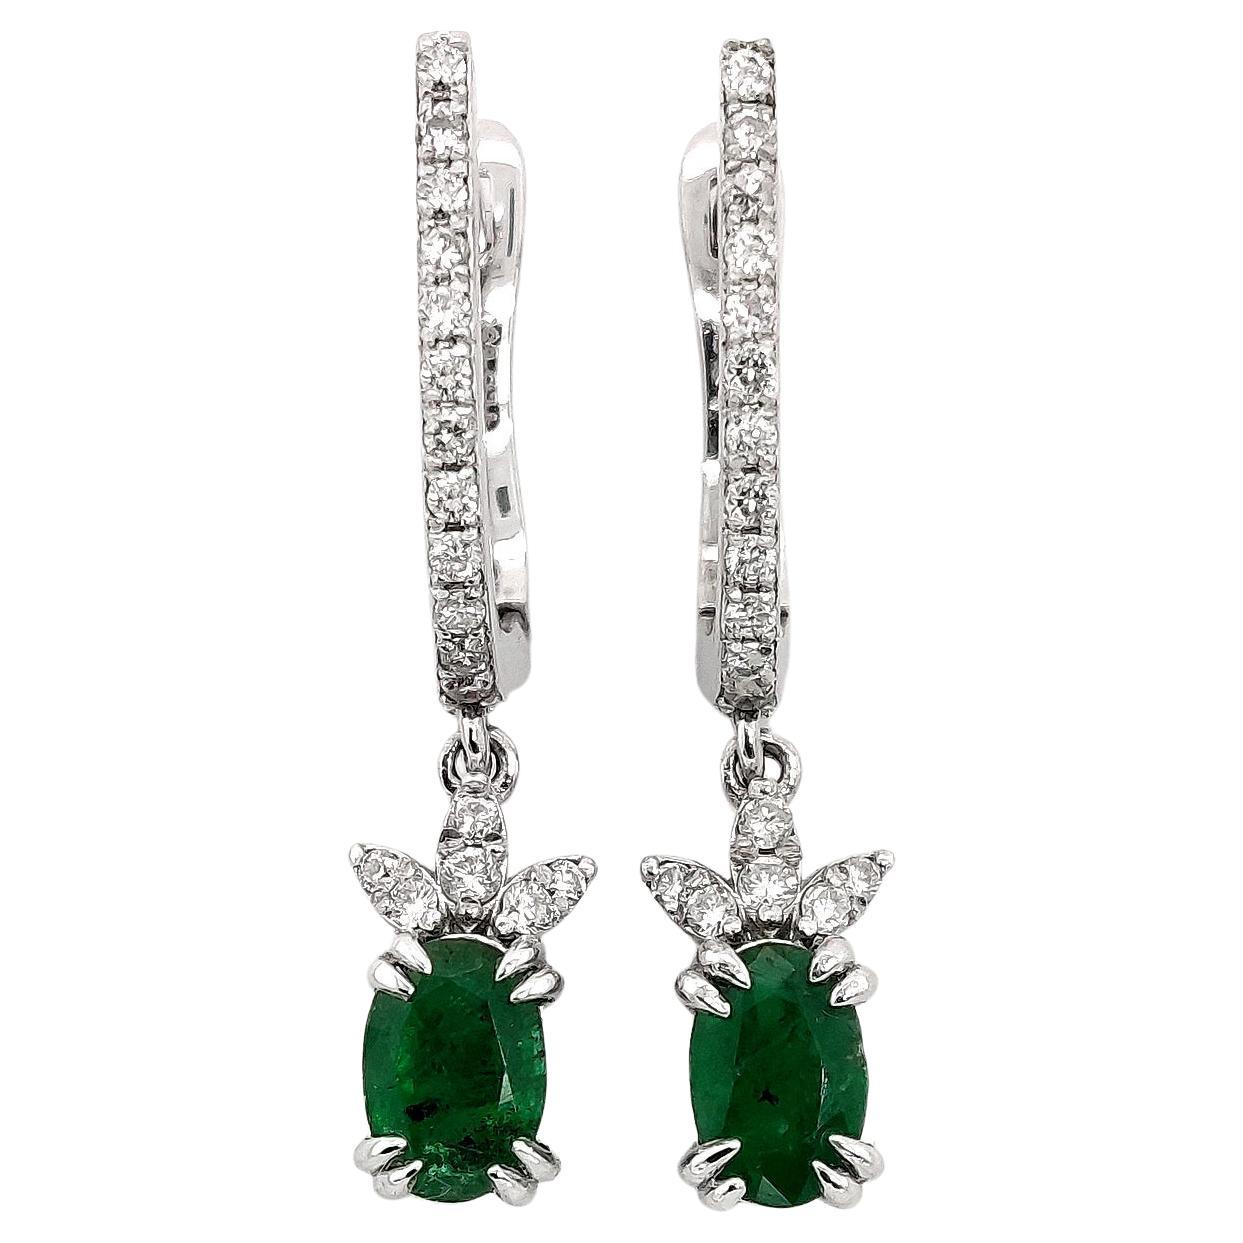 IGI Certified 1.09ct Emerald and Diamond Earrings 14k White Gold